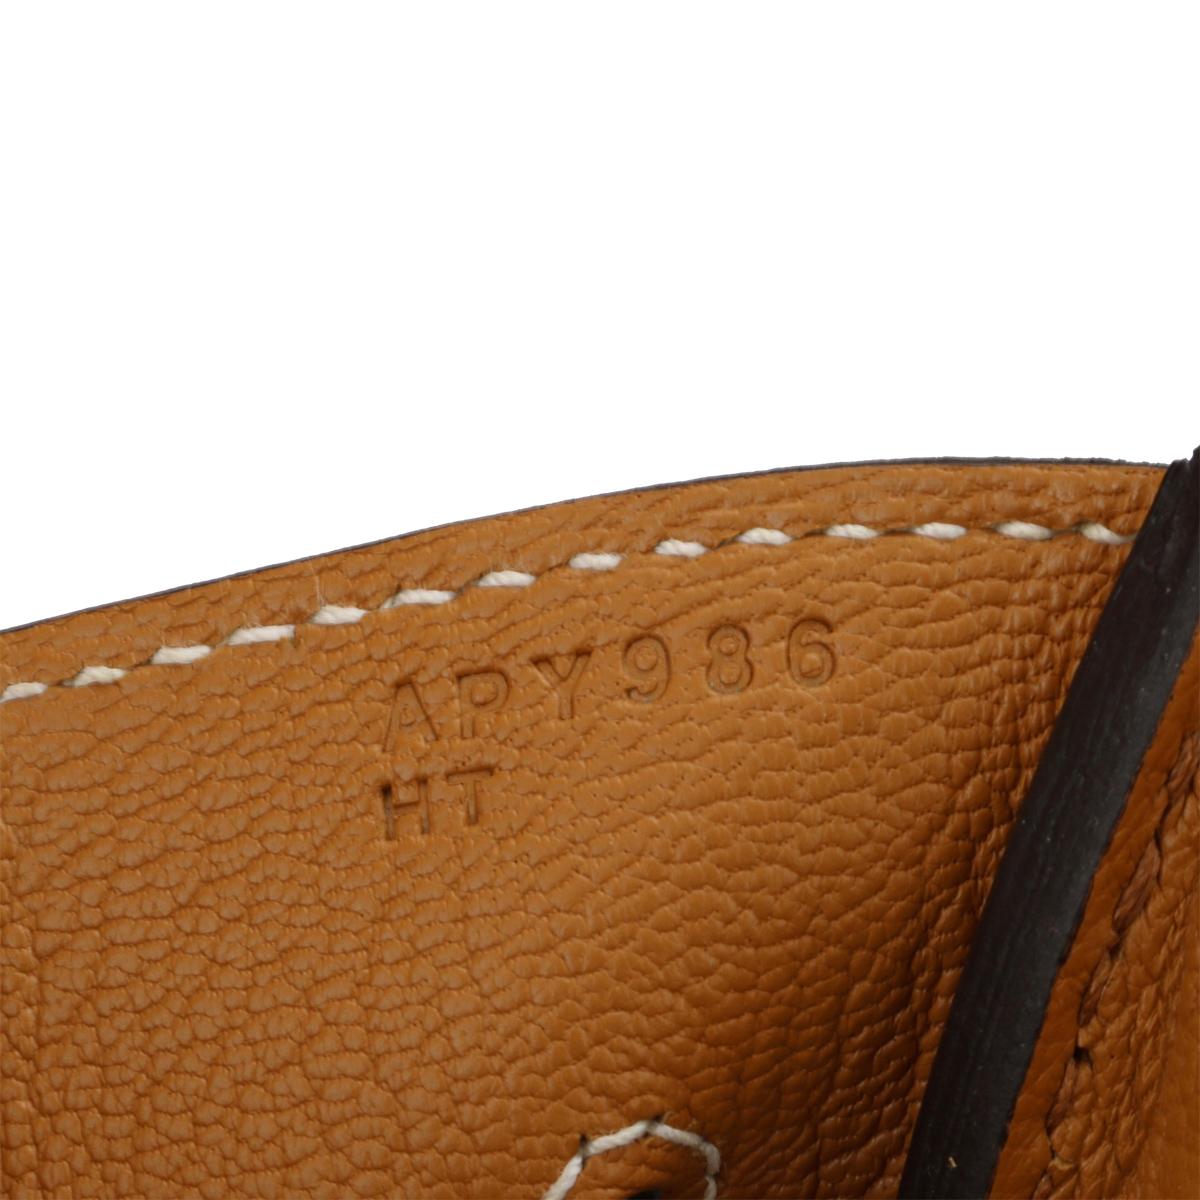 Hermès Birkin 35cm Bag Toffee Epsom Leather with Gold Hardware Stamp A 2017 10